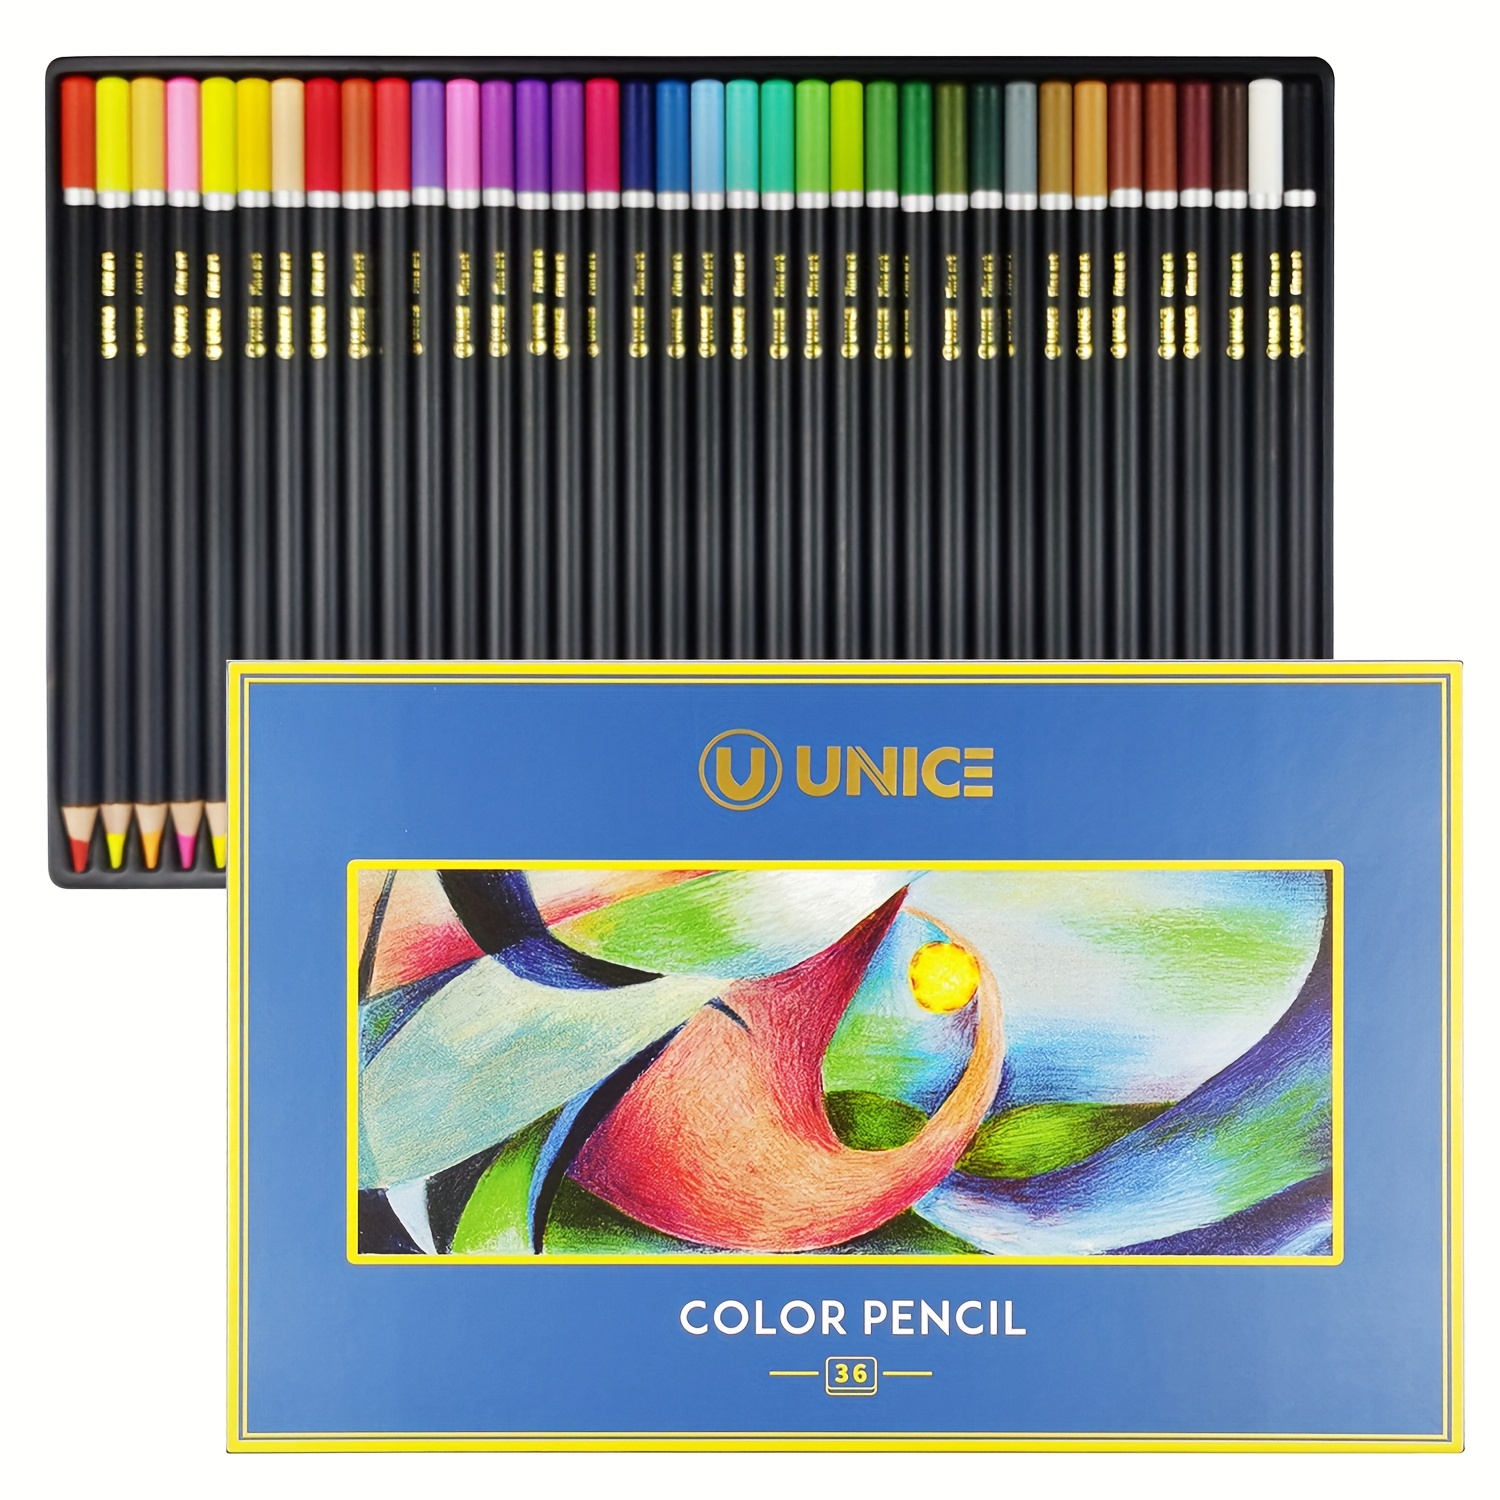 520 Colored Pencils - Multi-color Pencils Art Pencils Set For